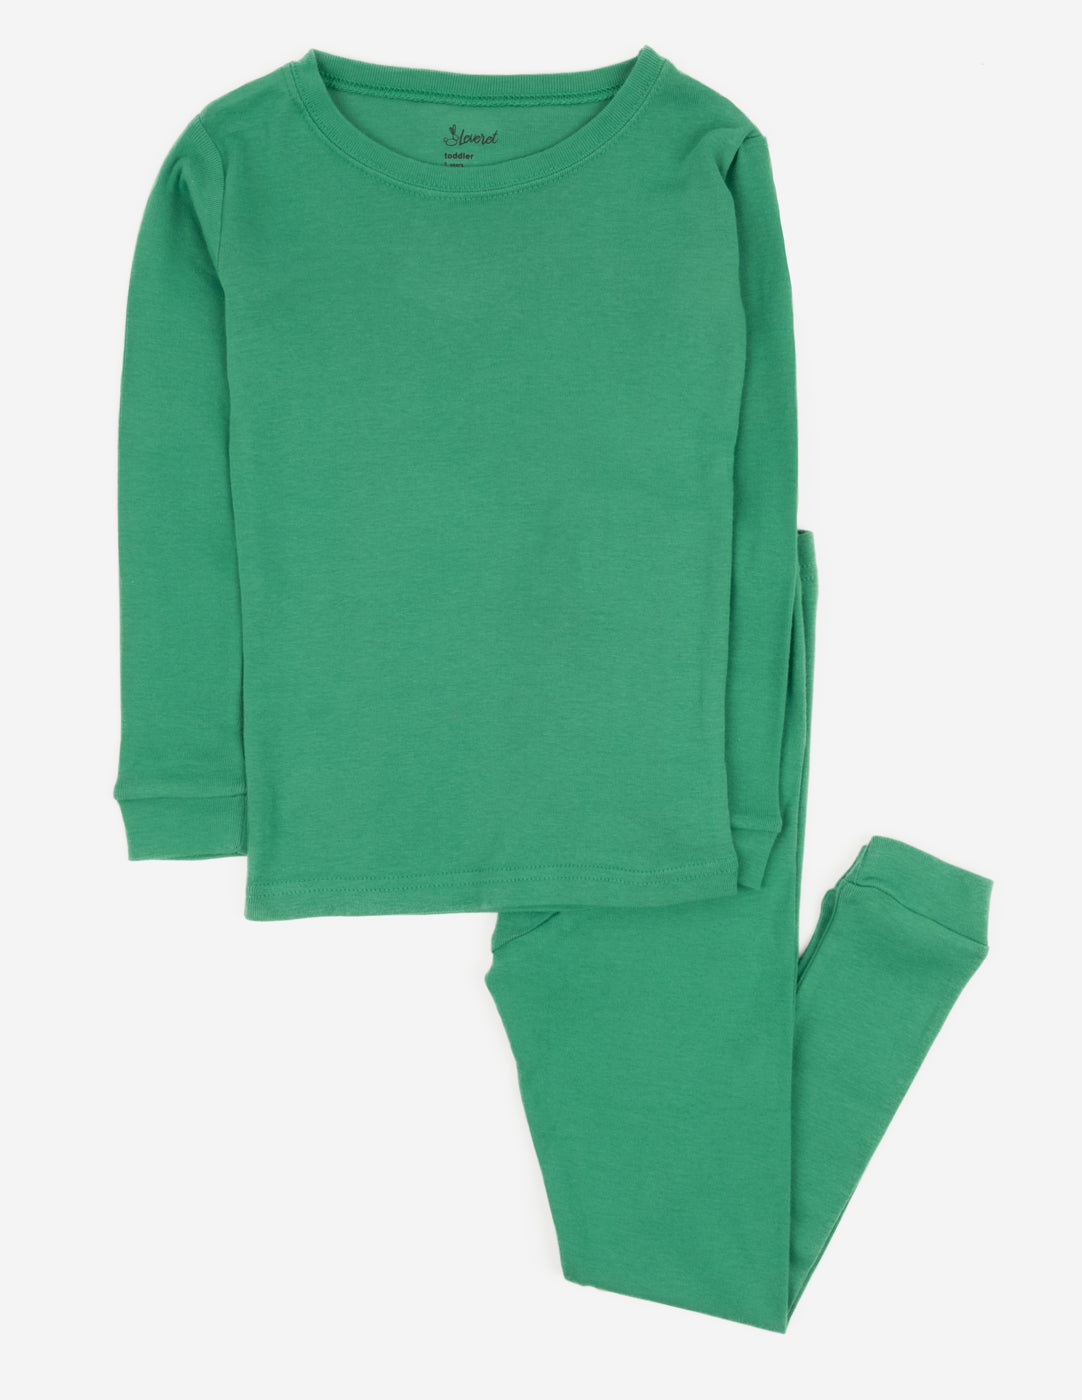 solid color green kids cotton pajama